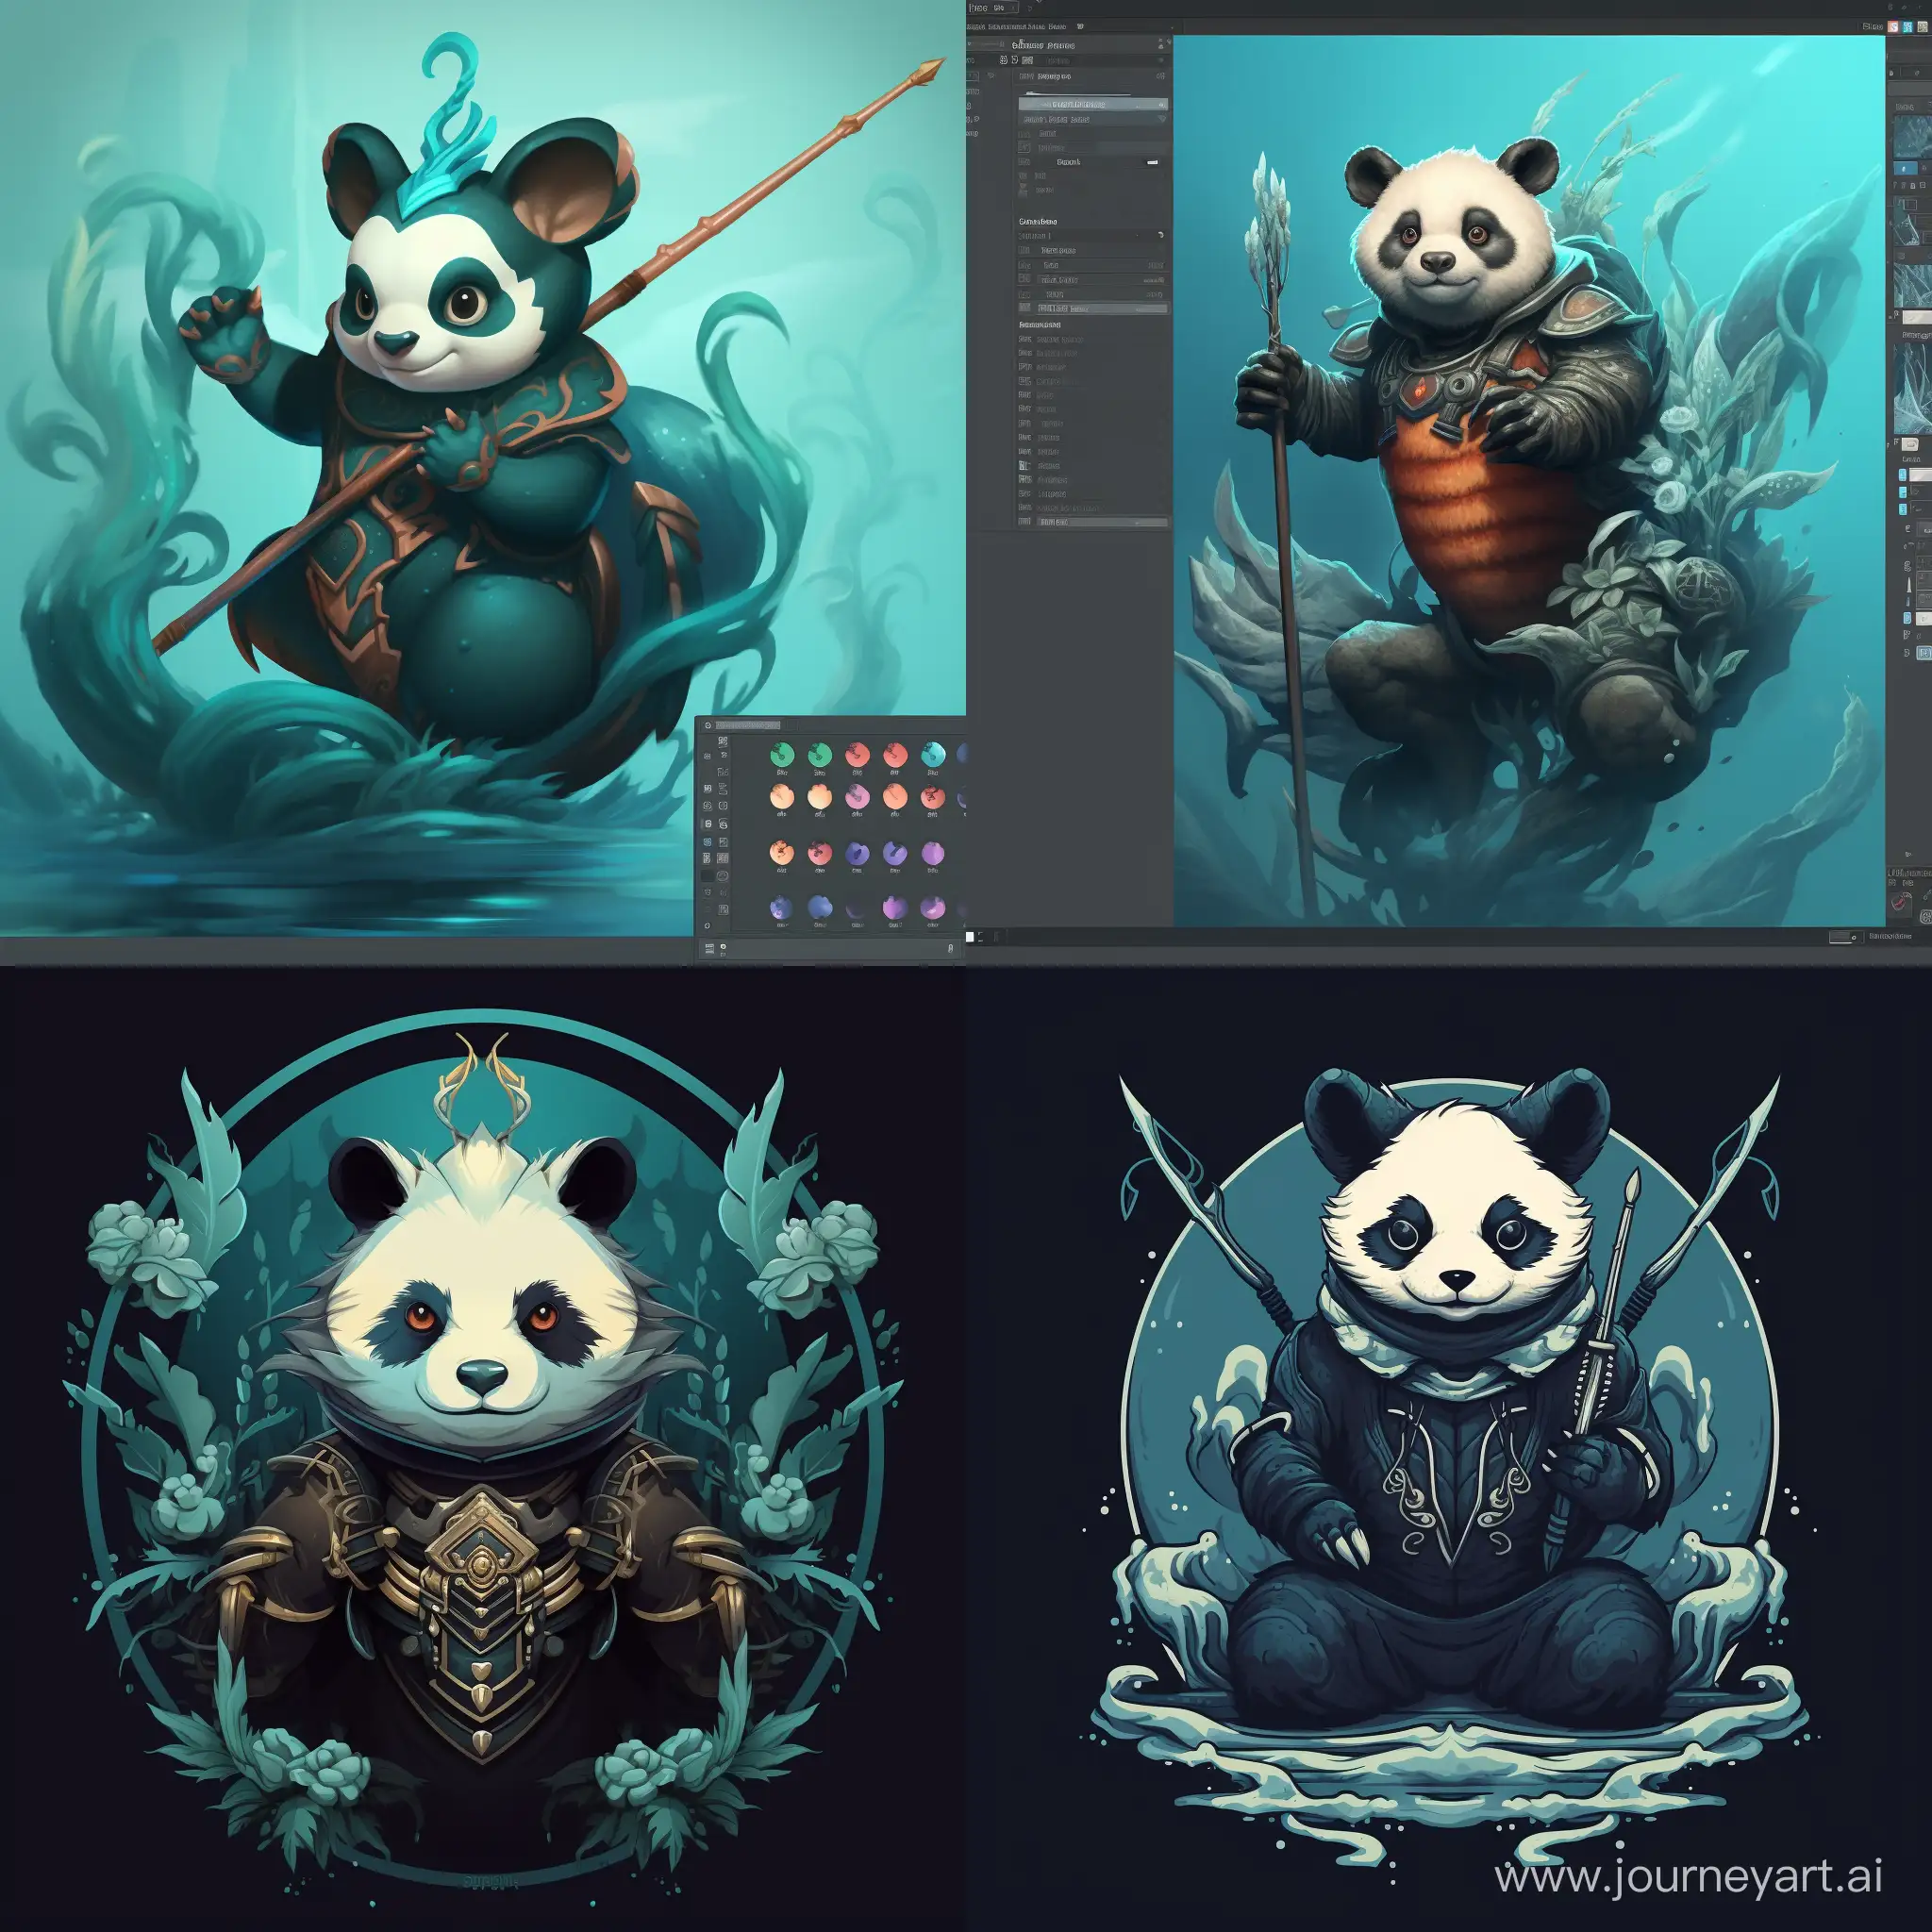 Mythical-Panda-Poseidon-Whimsical-TridentWielding-FishTailed-Creature